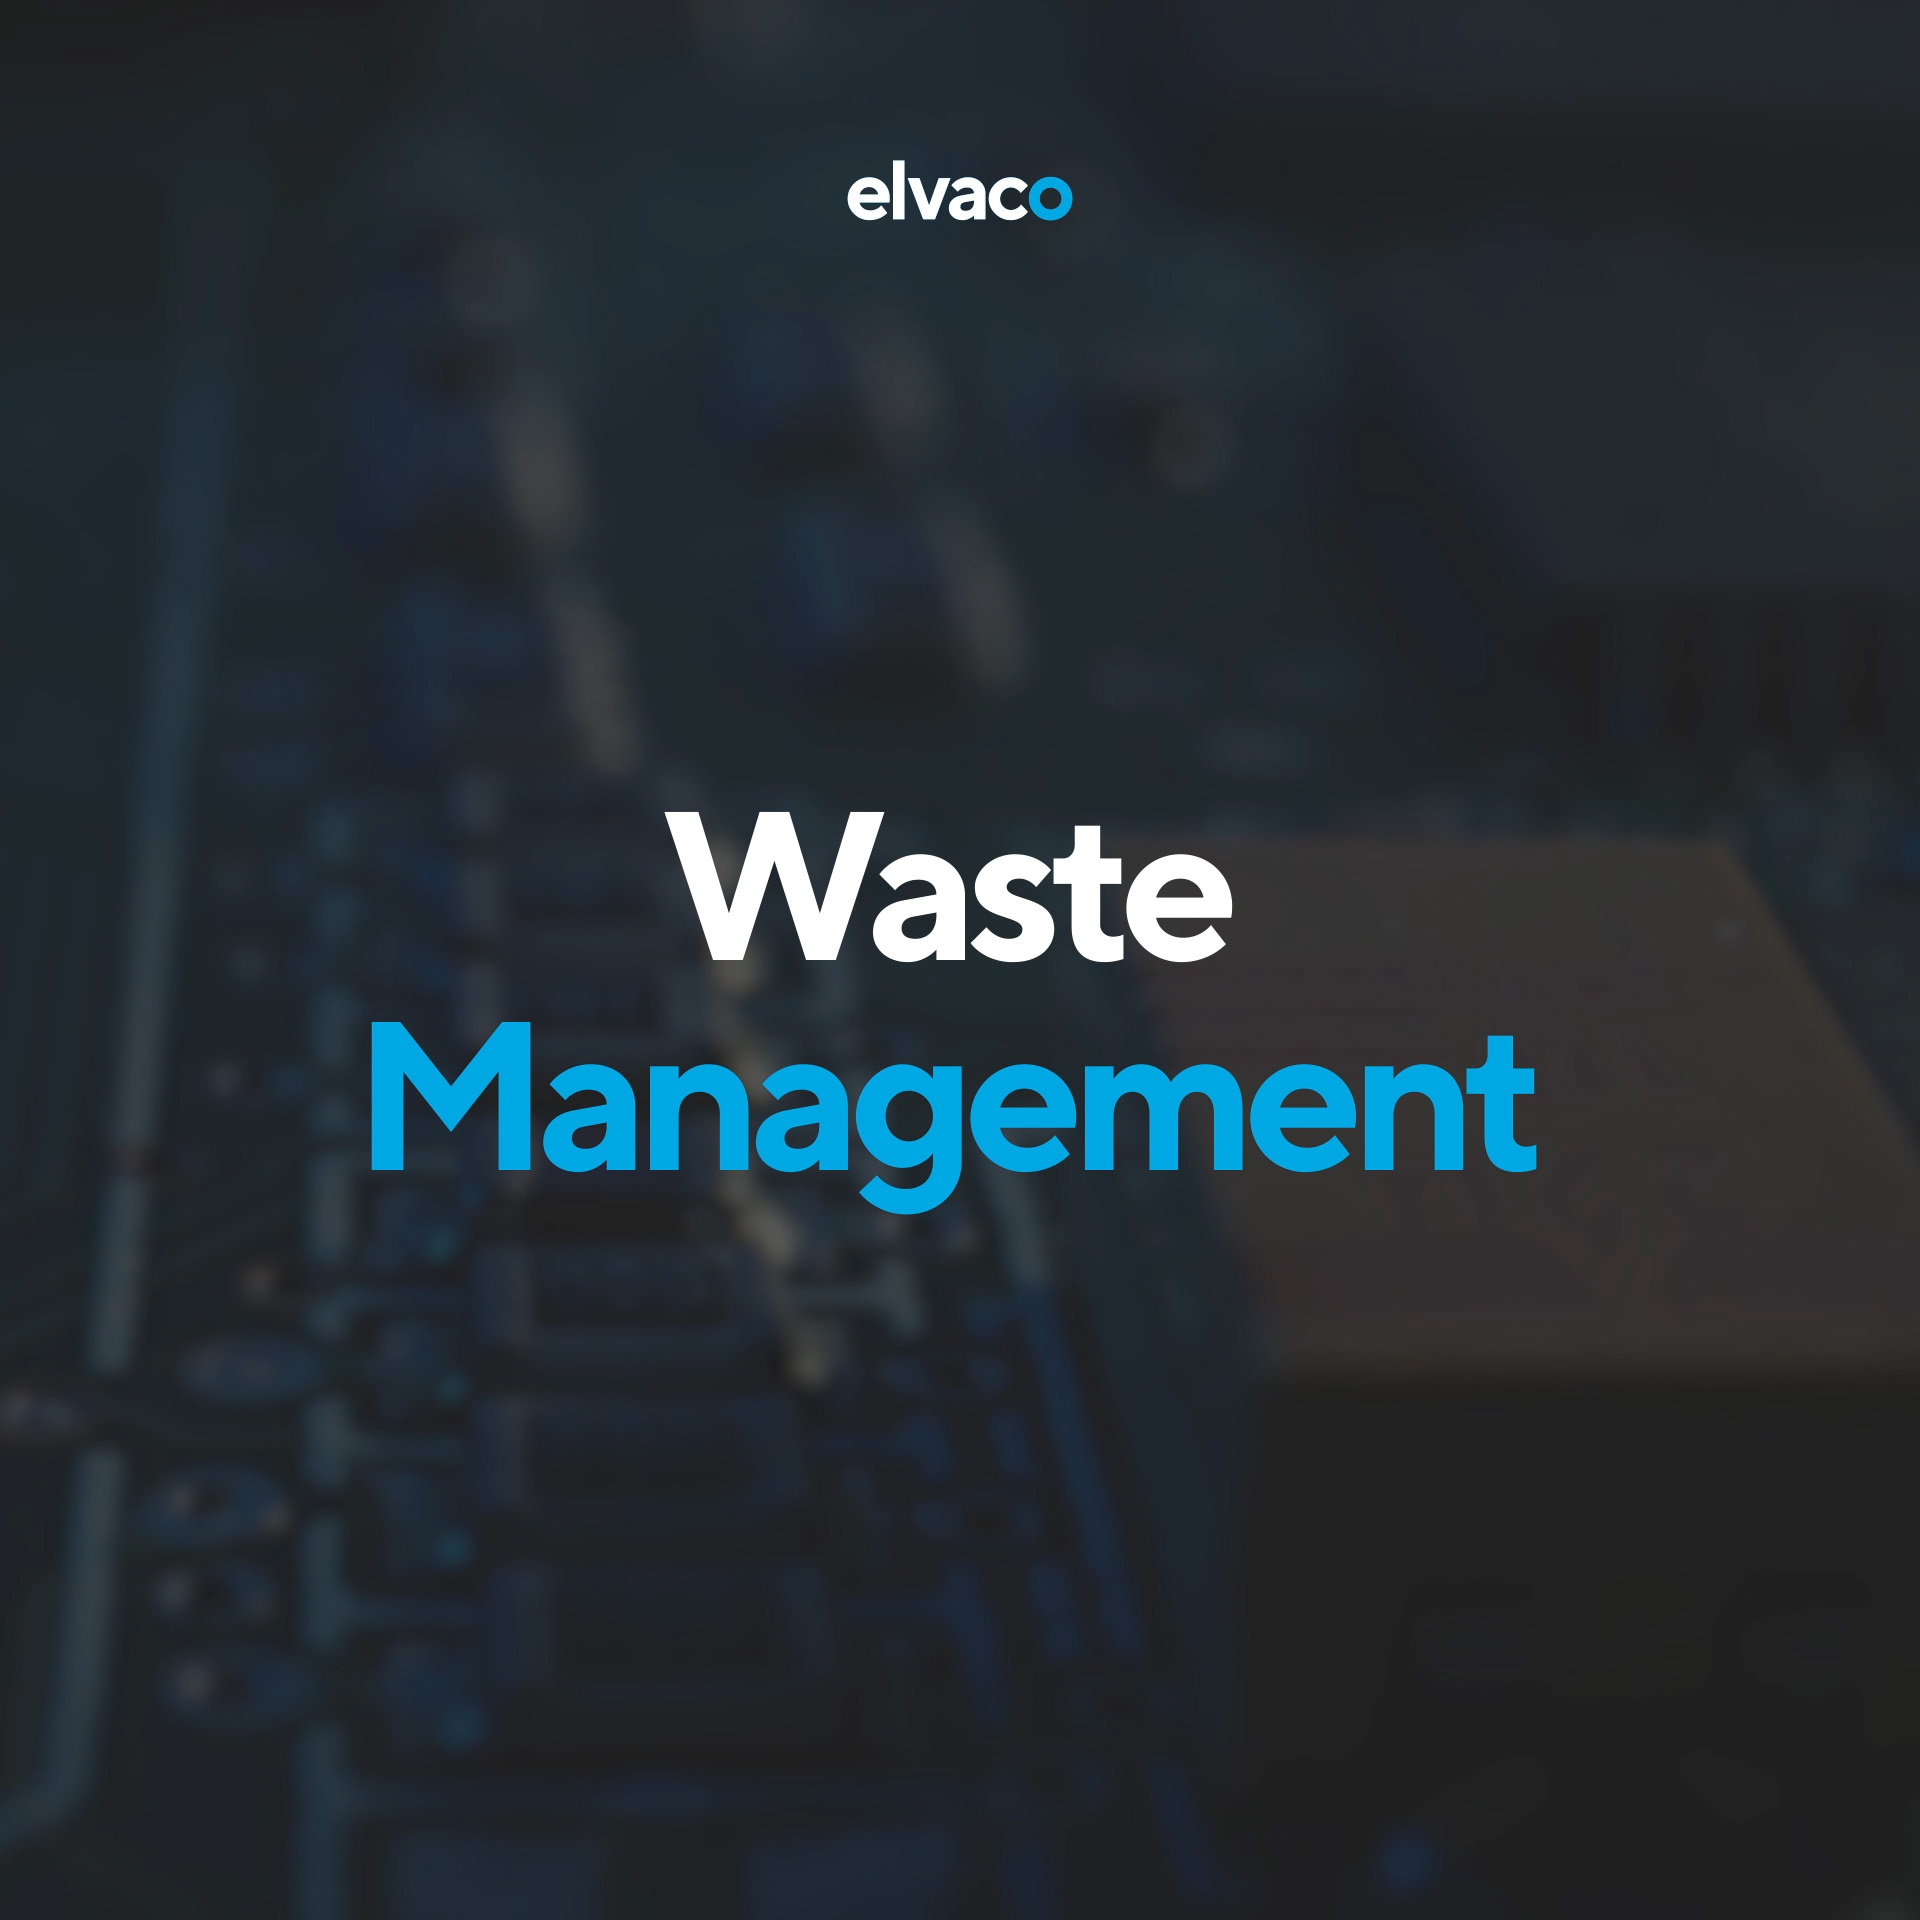 Waste Management – one step towards decreased environmental footprint